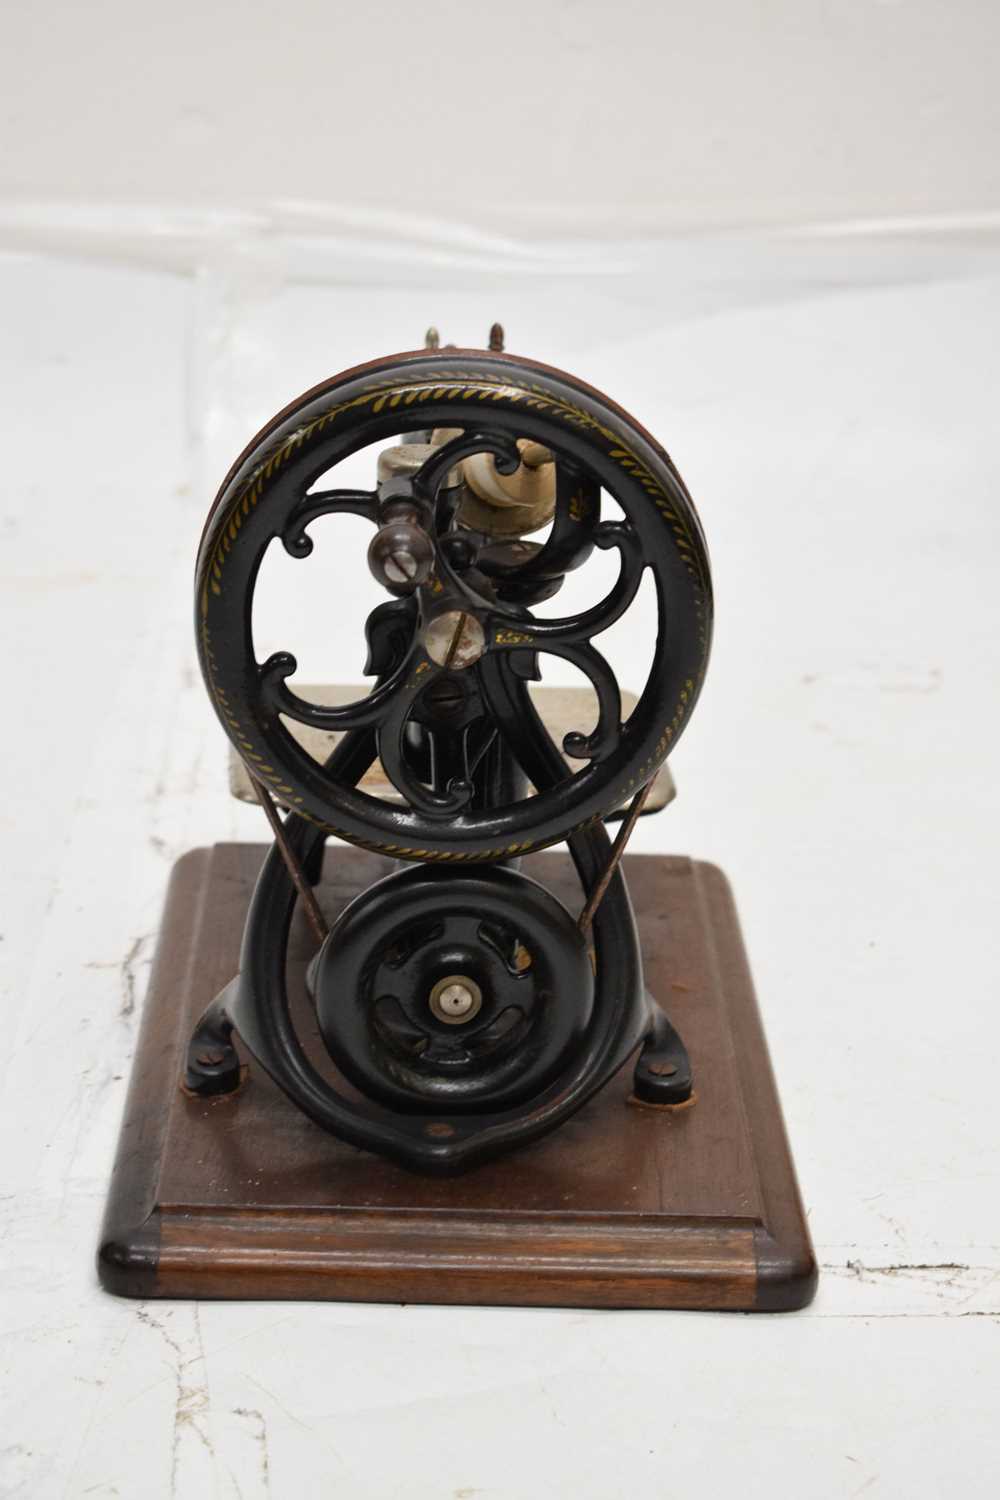 Late 19th century Willcox & Gibbs C-frame hand-cranked sewing machine - Image 3 of 9